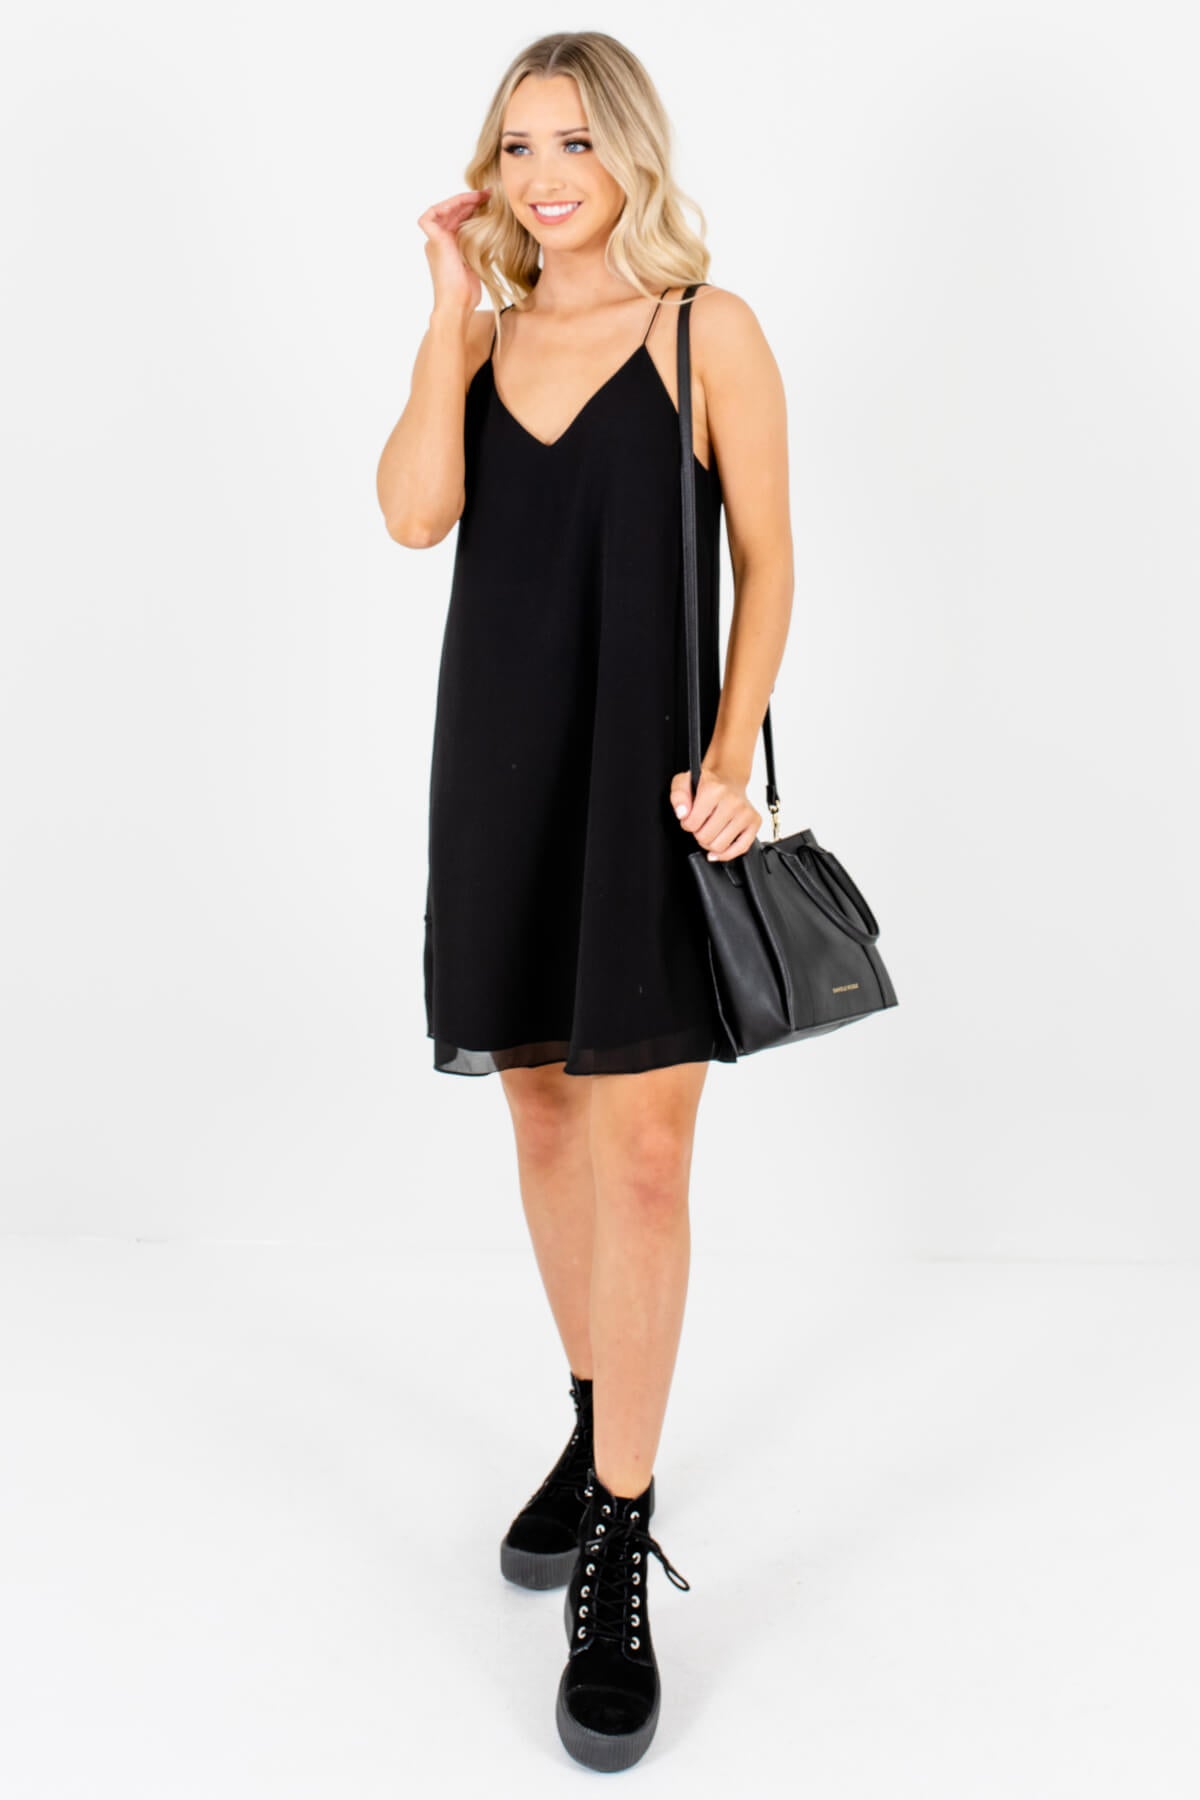 Black Cute and Comfortable Boutique Mini Dresses for Women